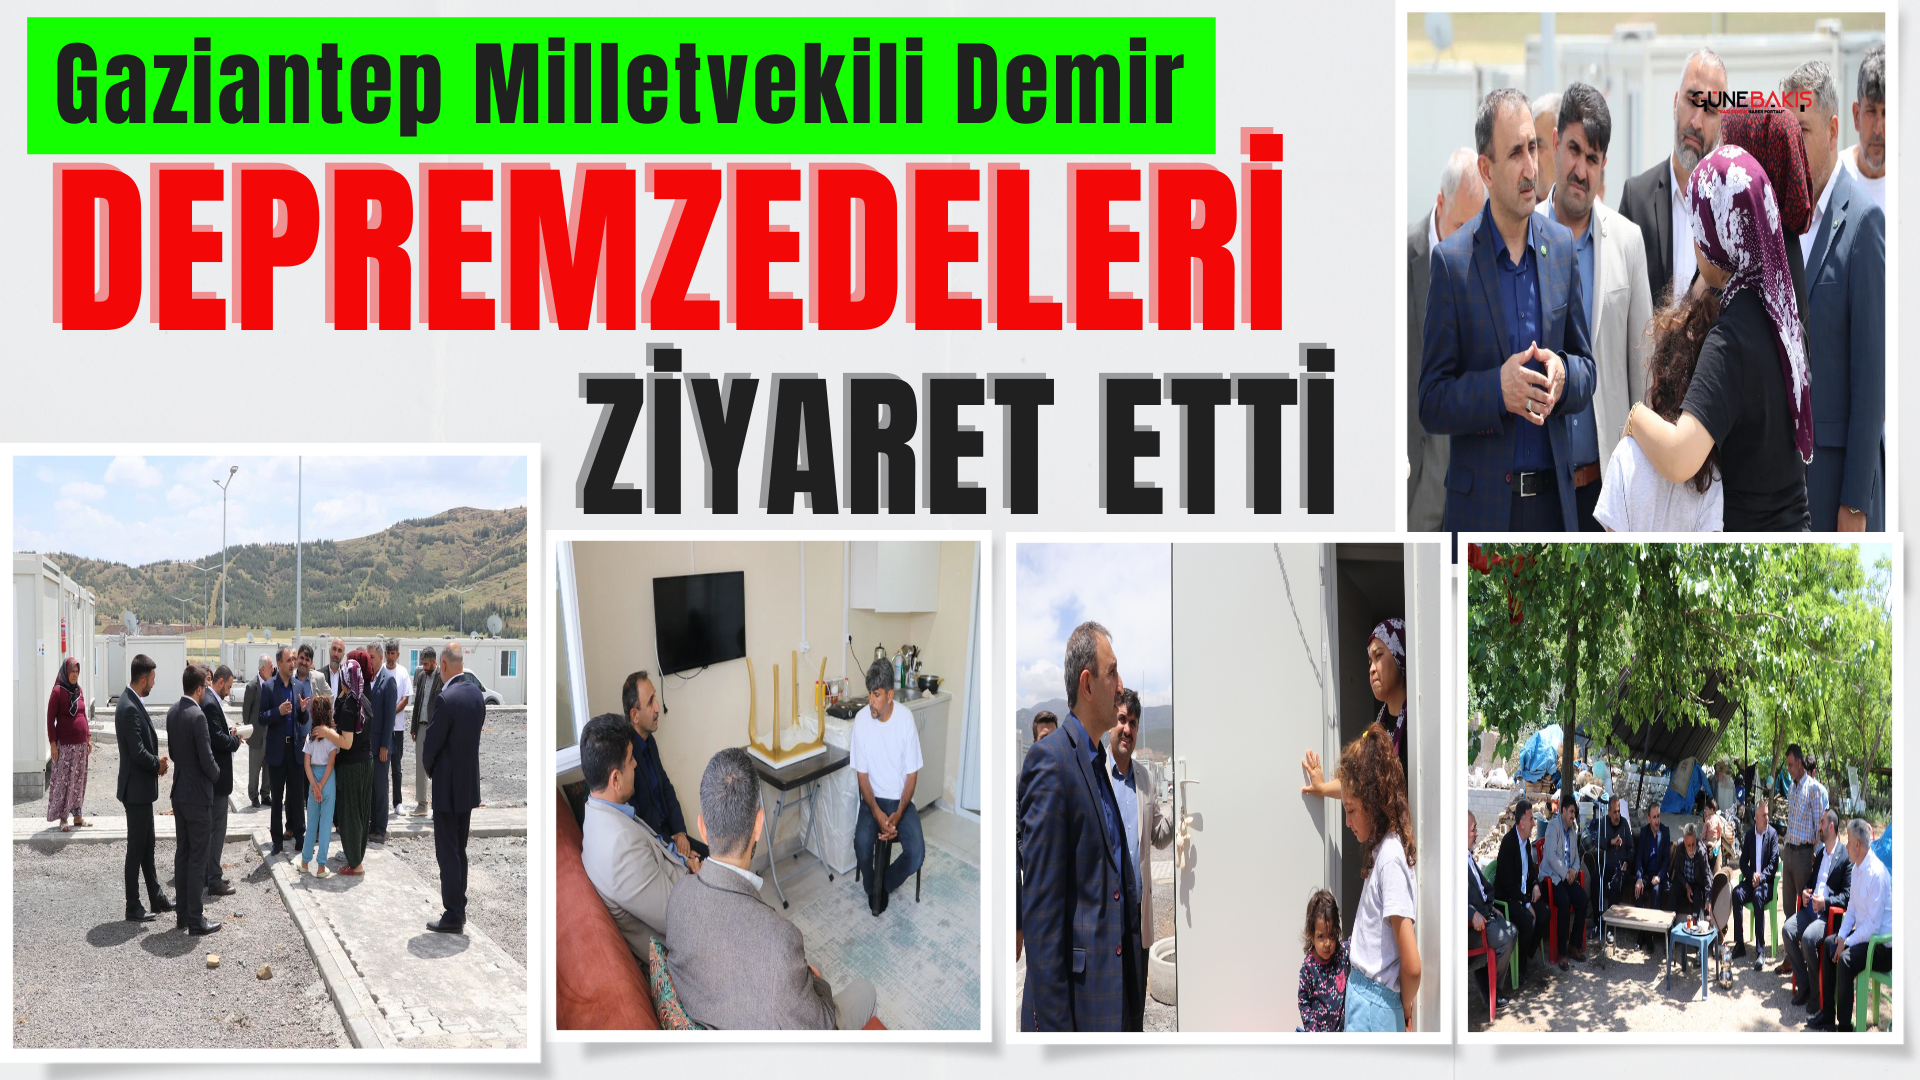 Gaziantep Milletvekili Demir, depremzedeleri ziyaret etti